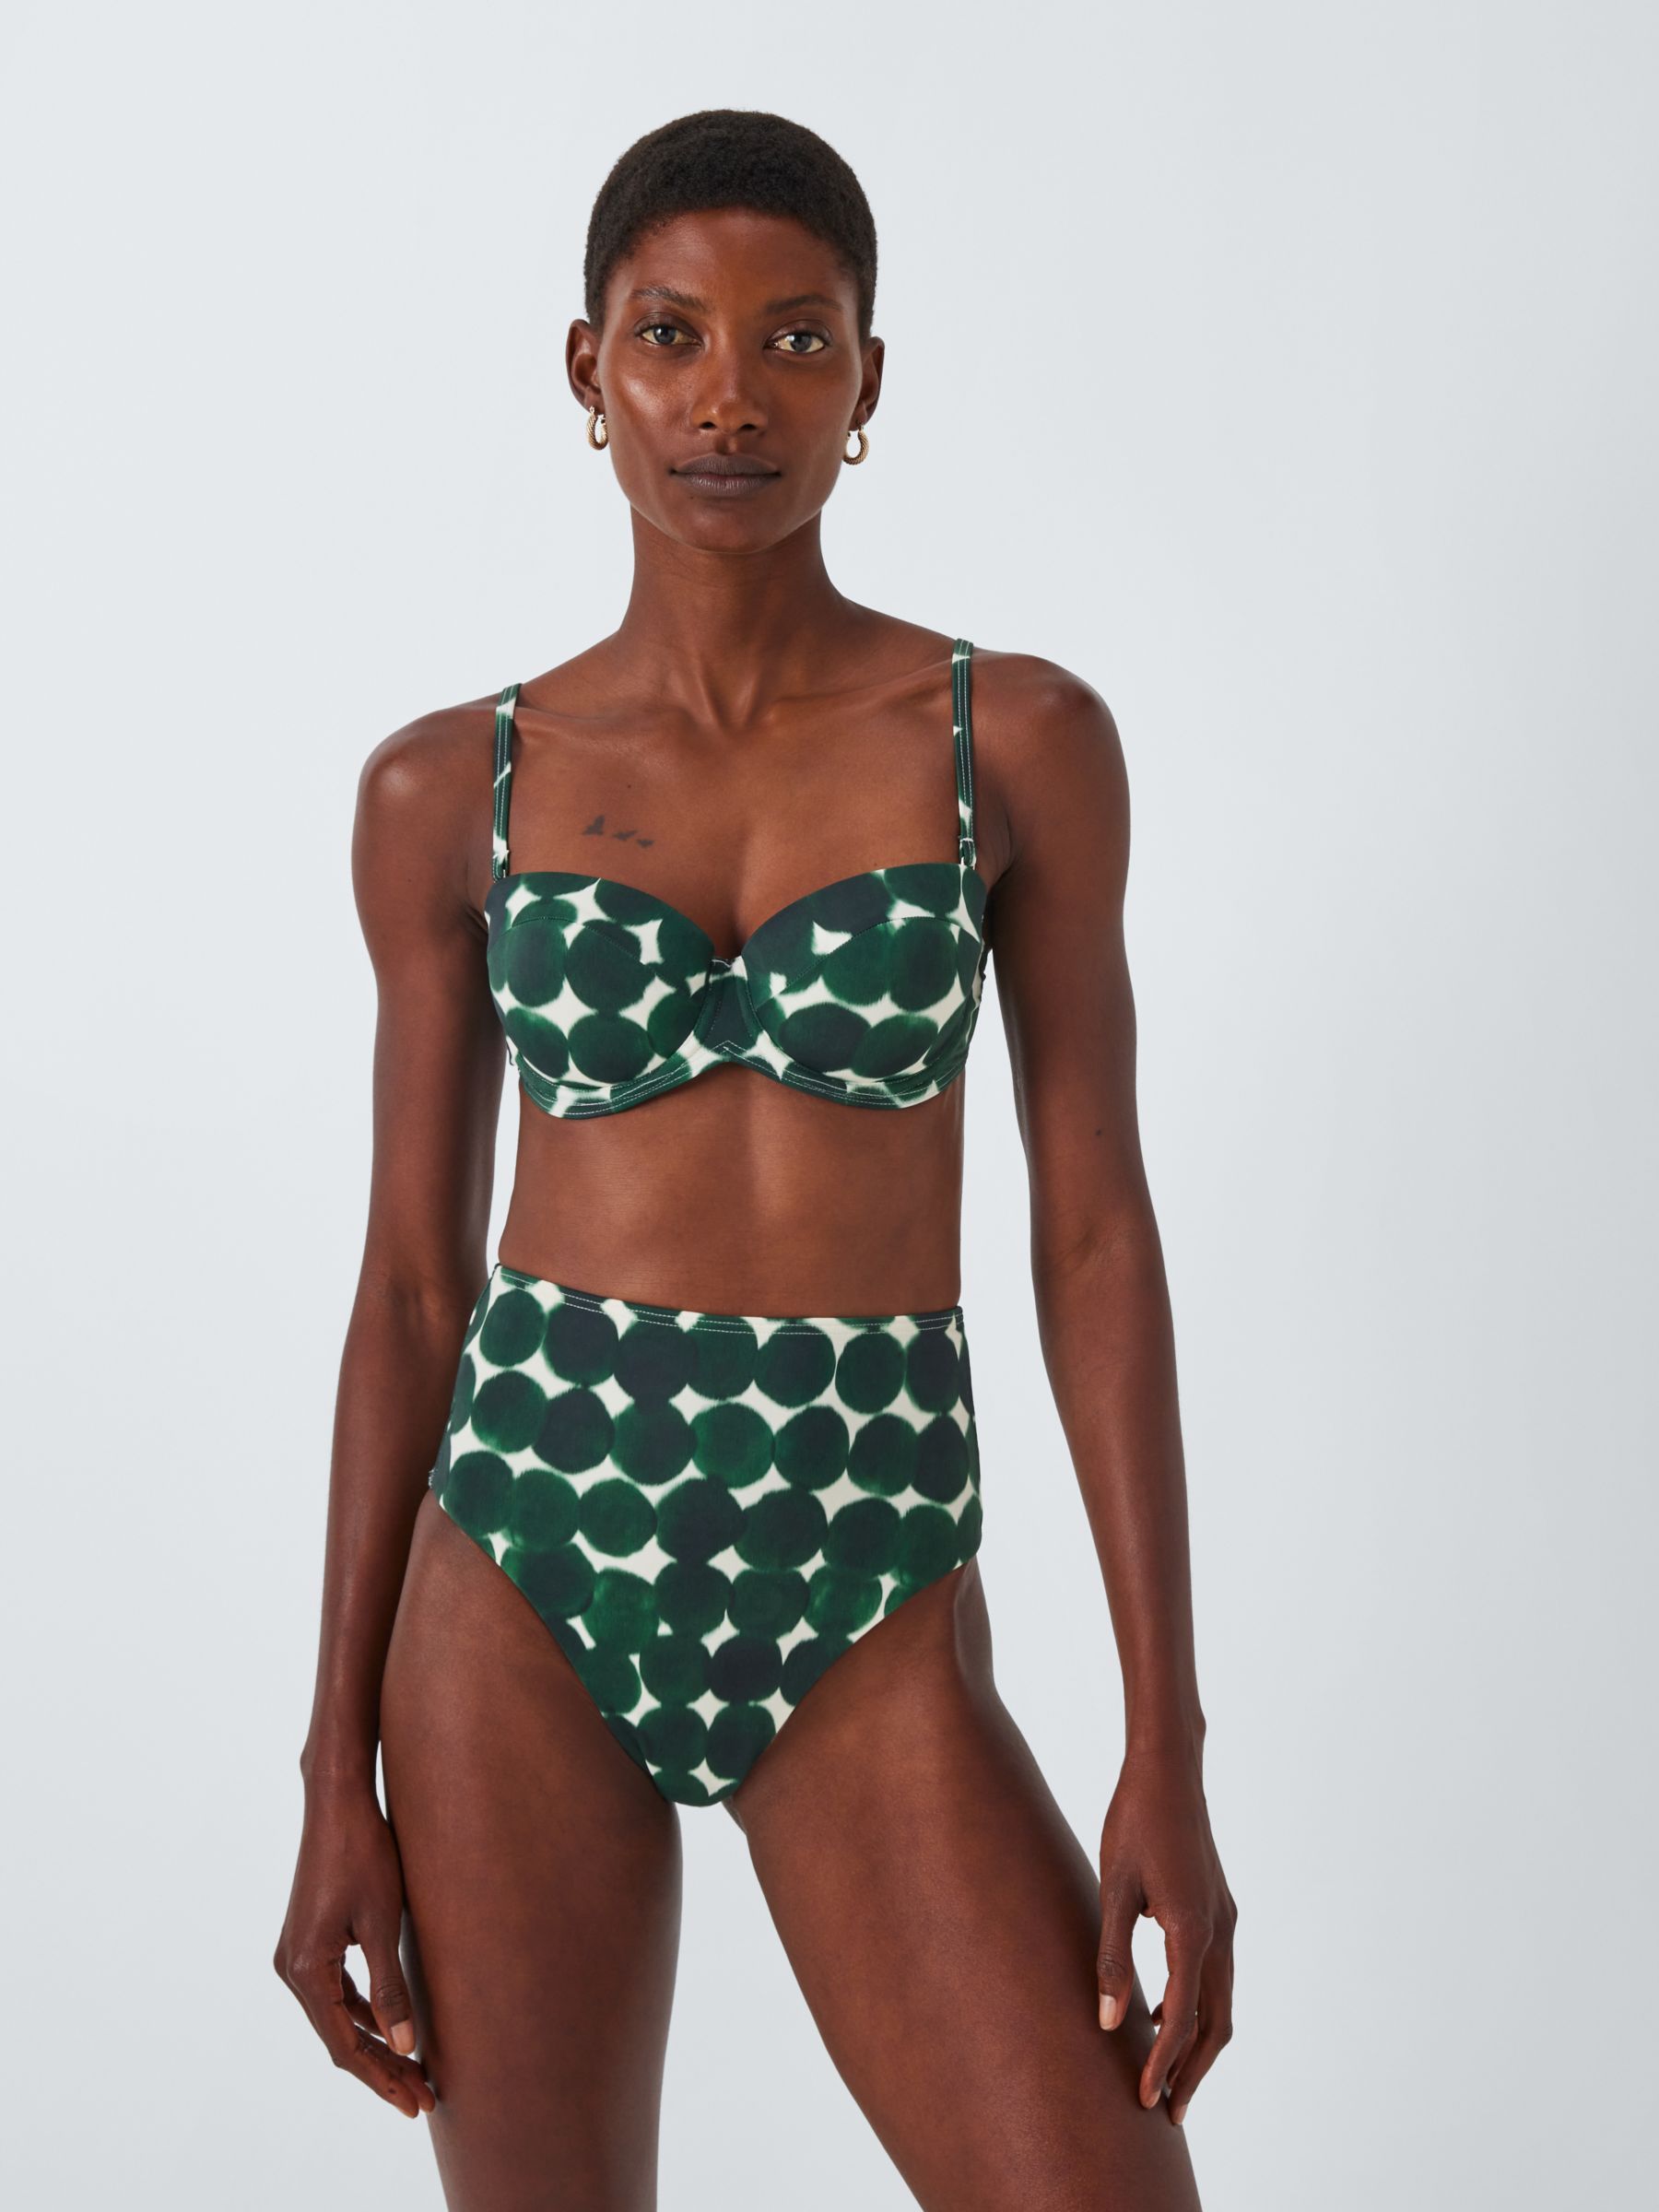 Buy John Lewis Haze Spot High Waist Bikini Bottom, Dark Green Online at johnlewis.com